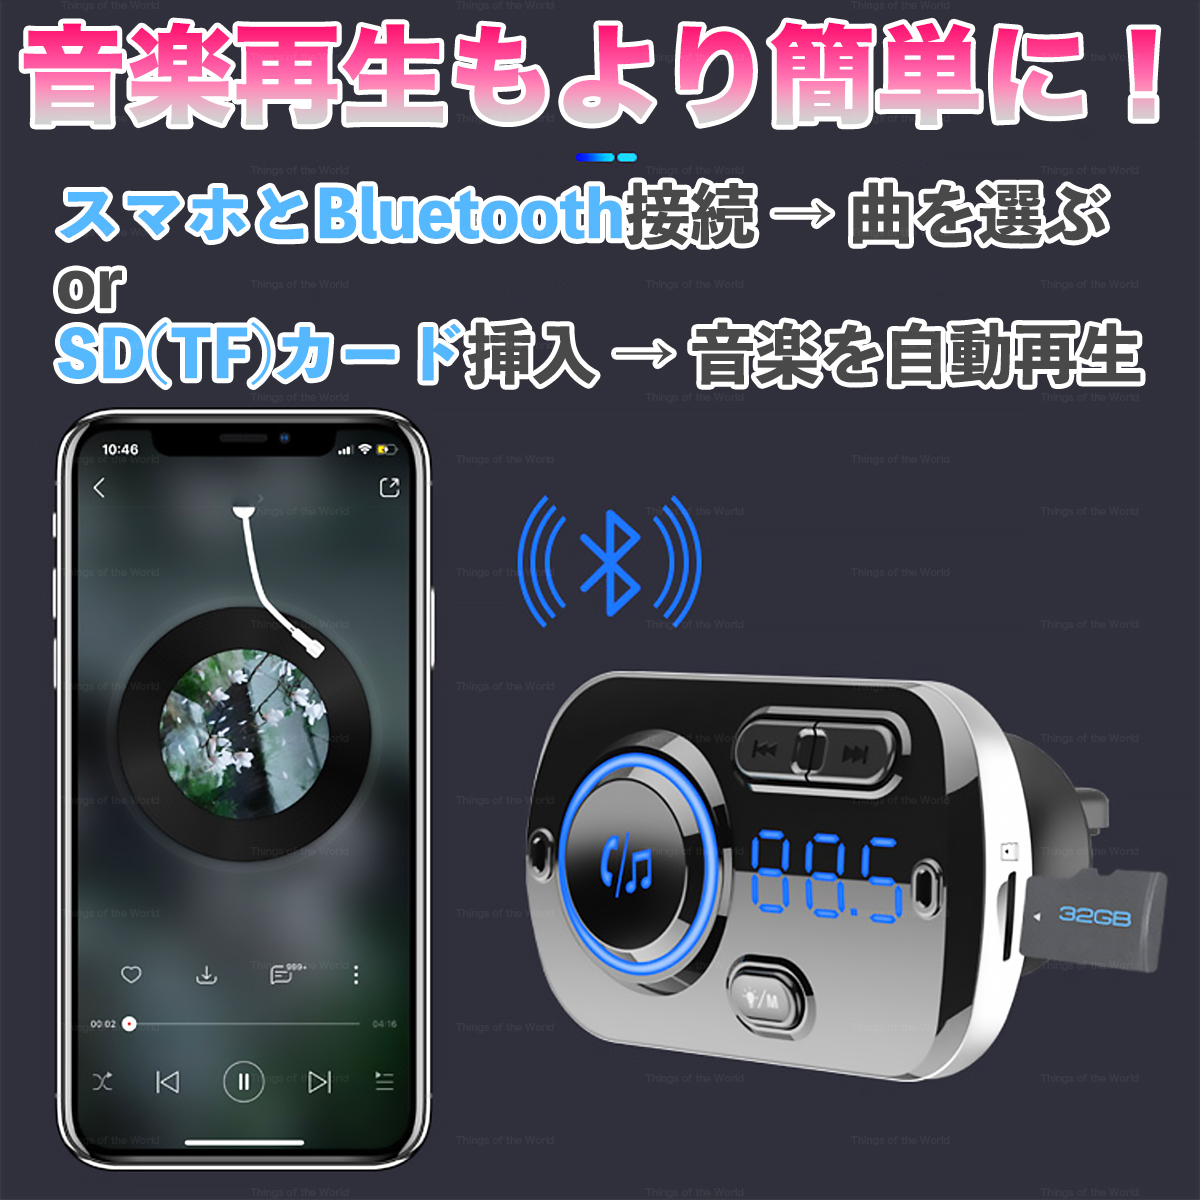 FMトランスミッター Bluetooth iPhone iPod USB Android MP3 sdカード MicroSD 12V 24V ハンズフリー 通話